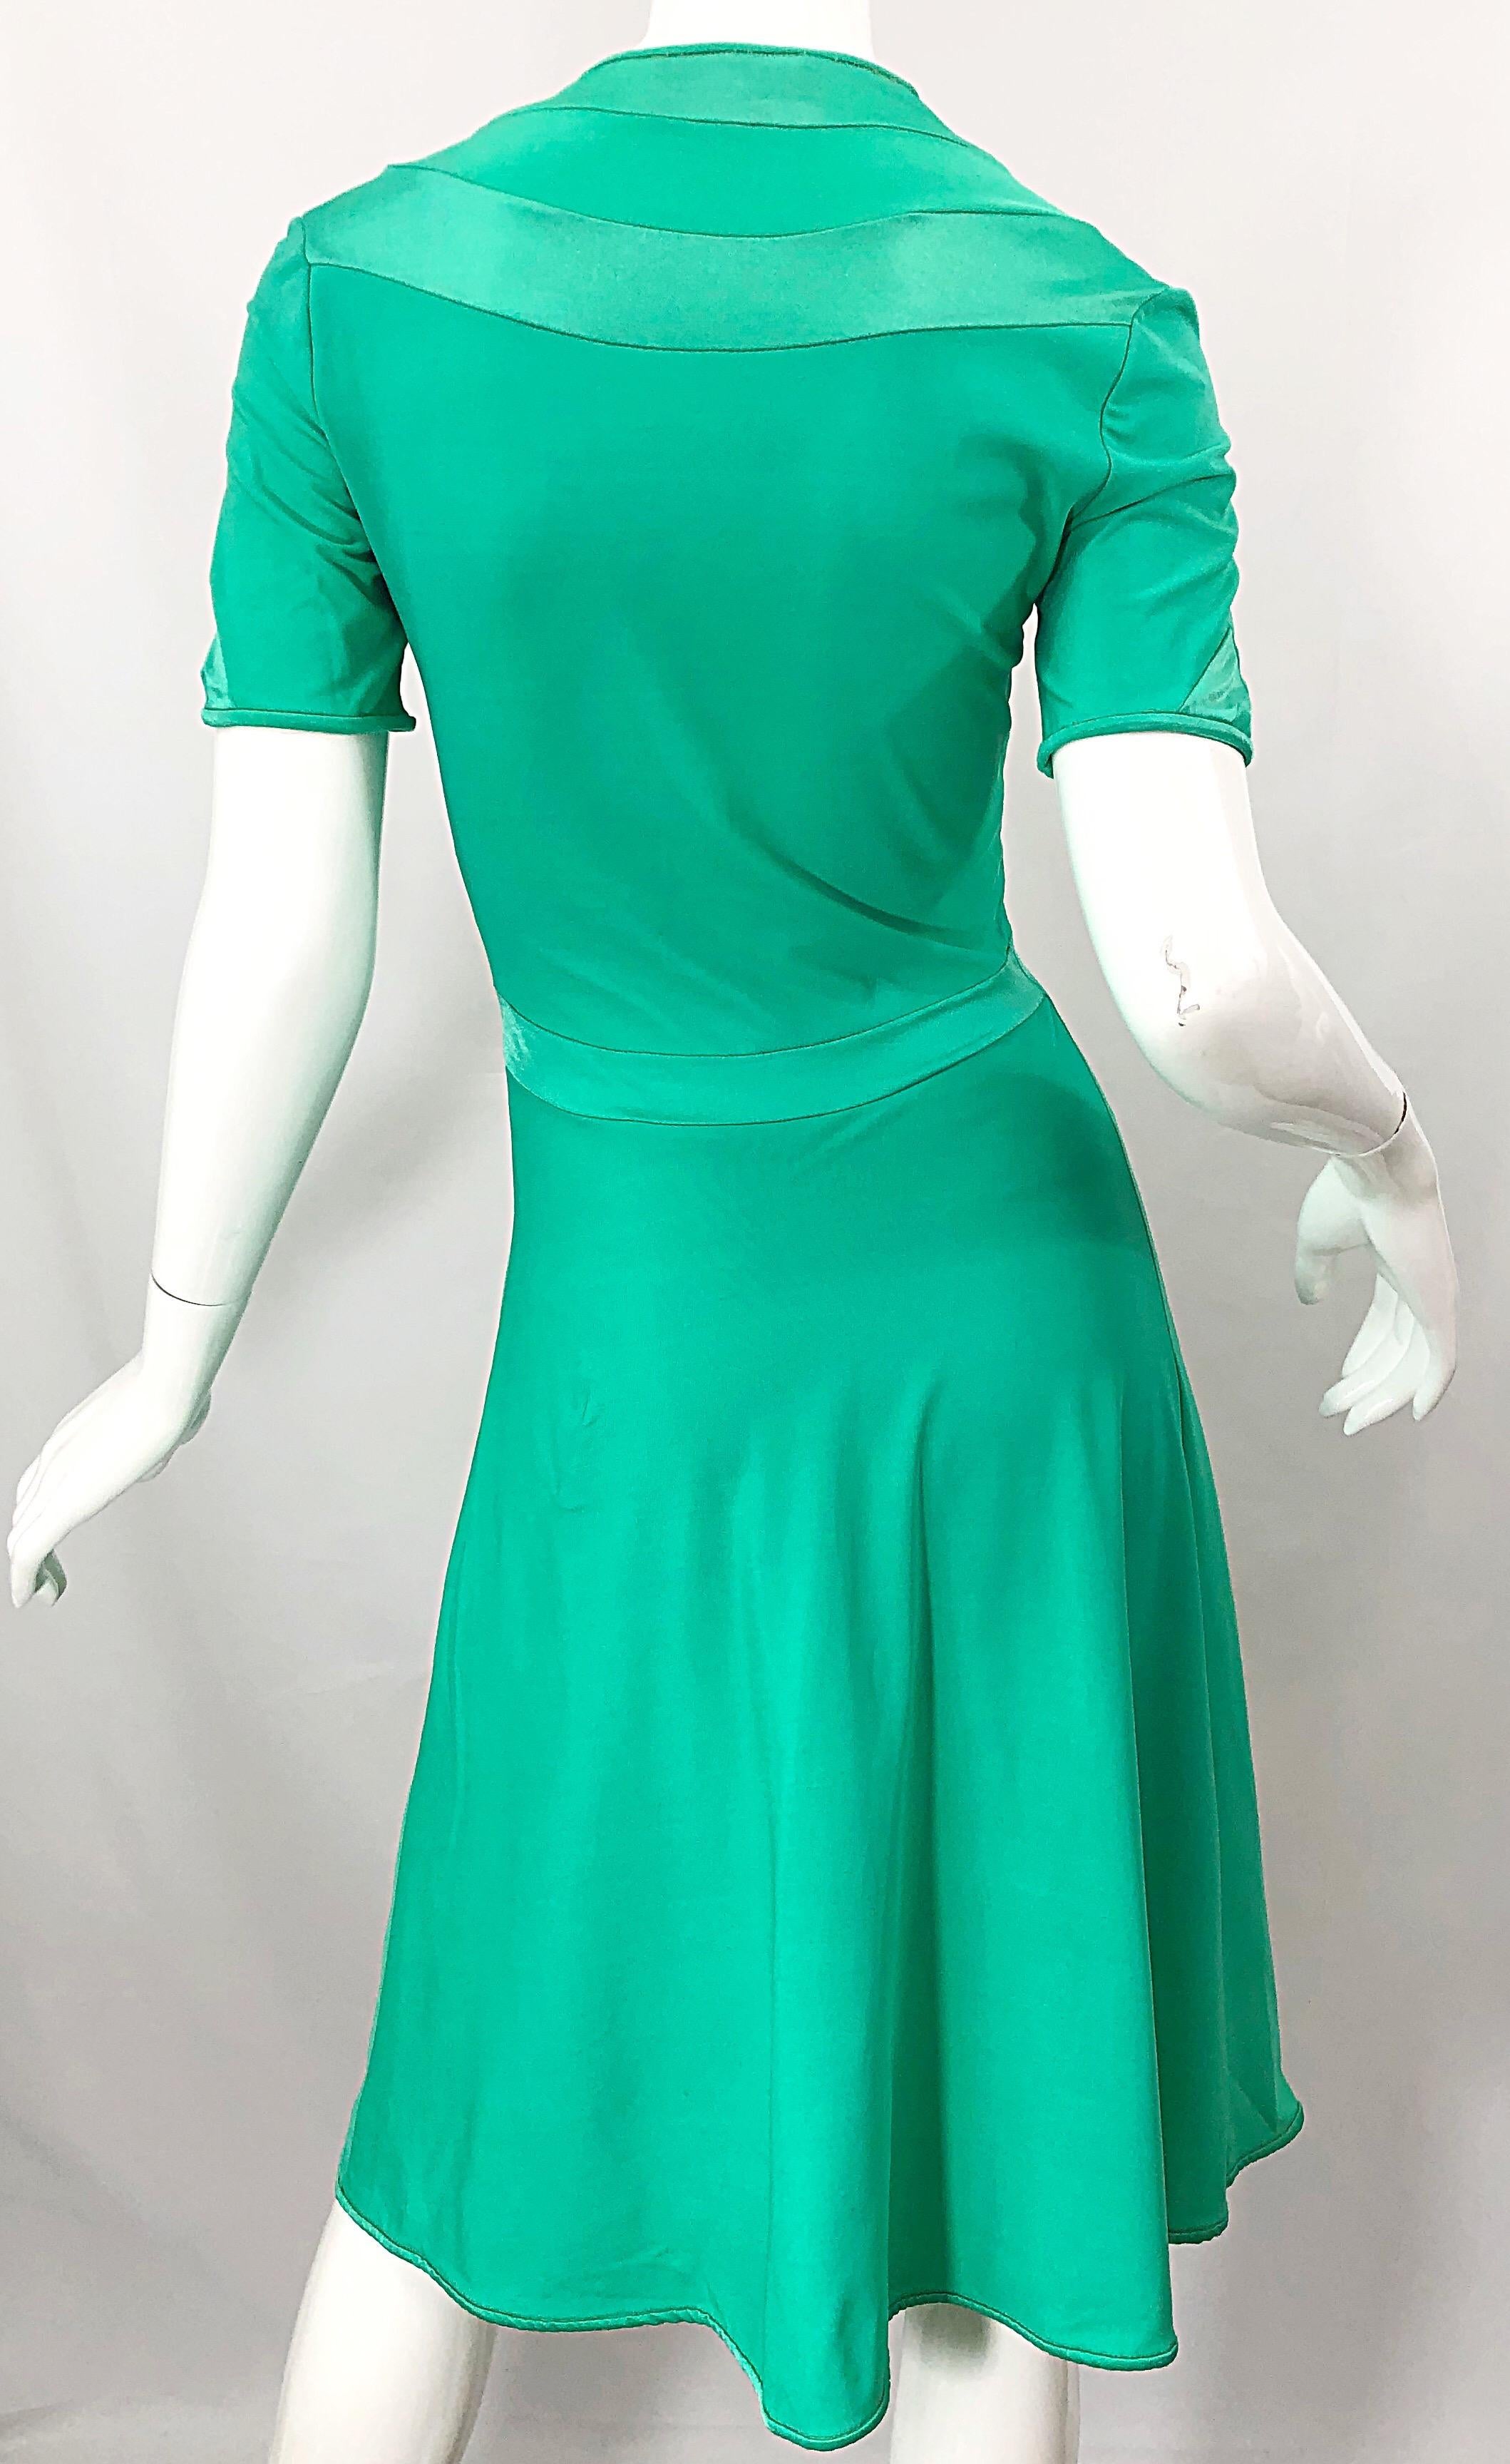 1970s Giorgio di Sant Angelo Kelly Green Slinky Bodysuit 70s Vintage Dress For Sale 5